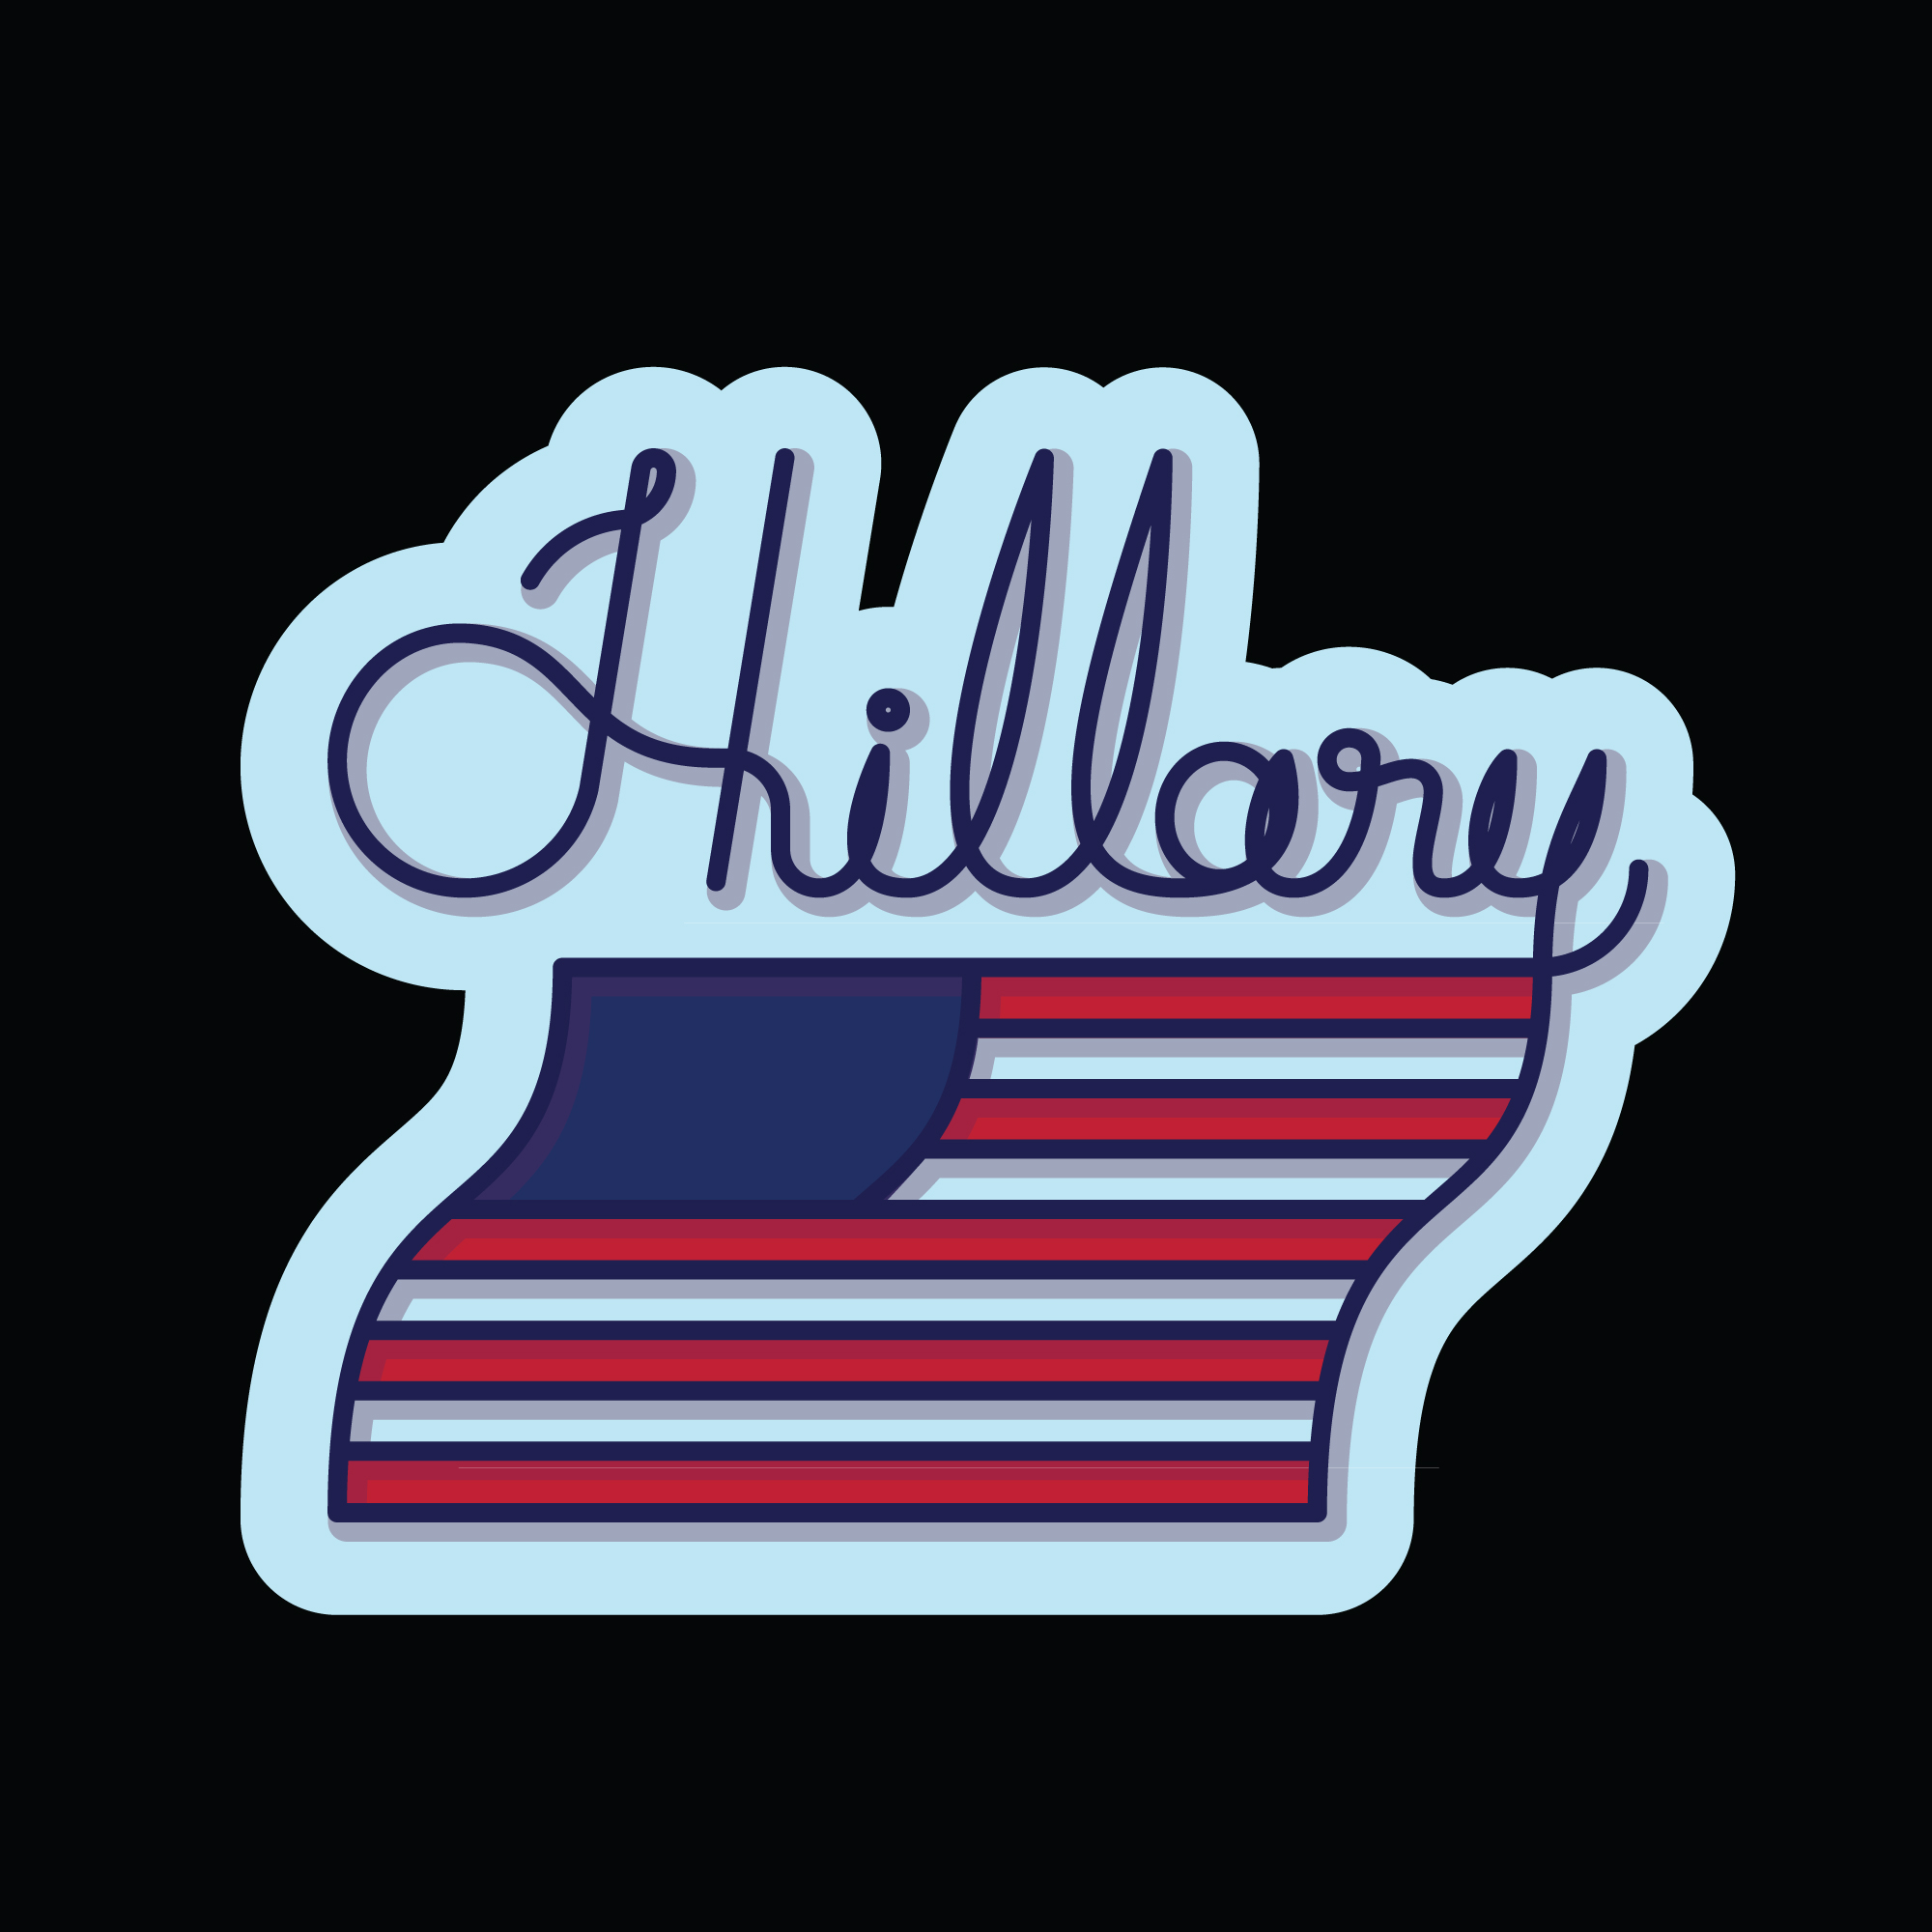 Hillary clinton usa american presidential campaign badge branding identity design by Maximillian Piras